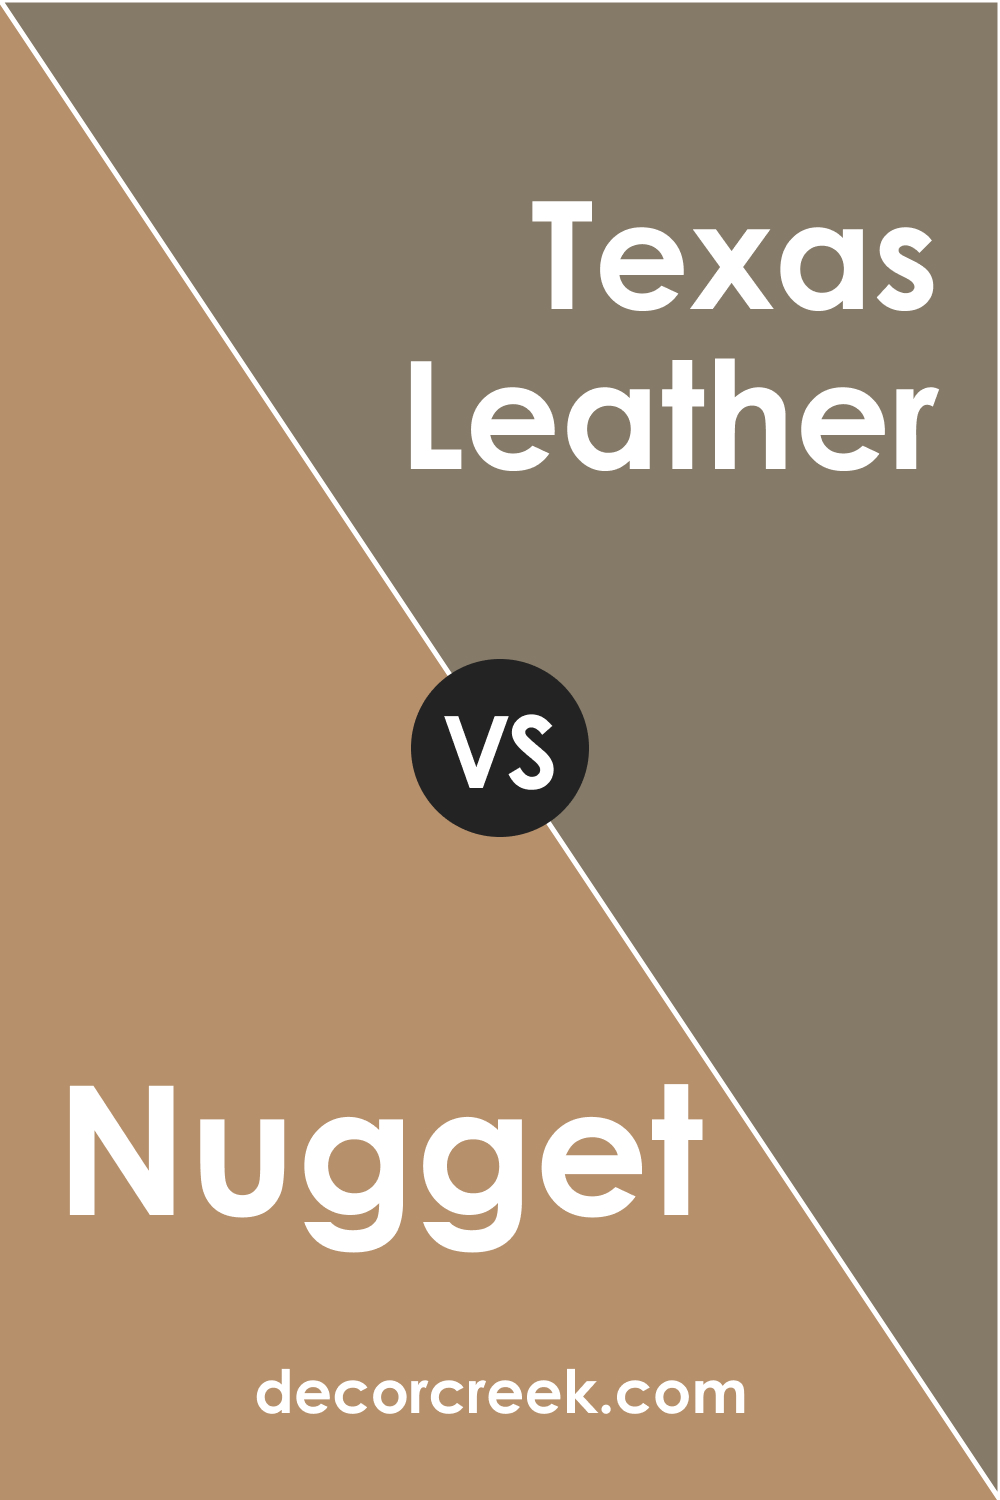 Nugget AC-9 vs. AC-3 Texas Leather